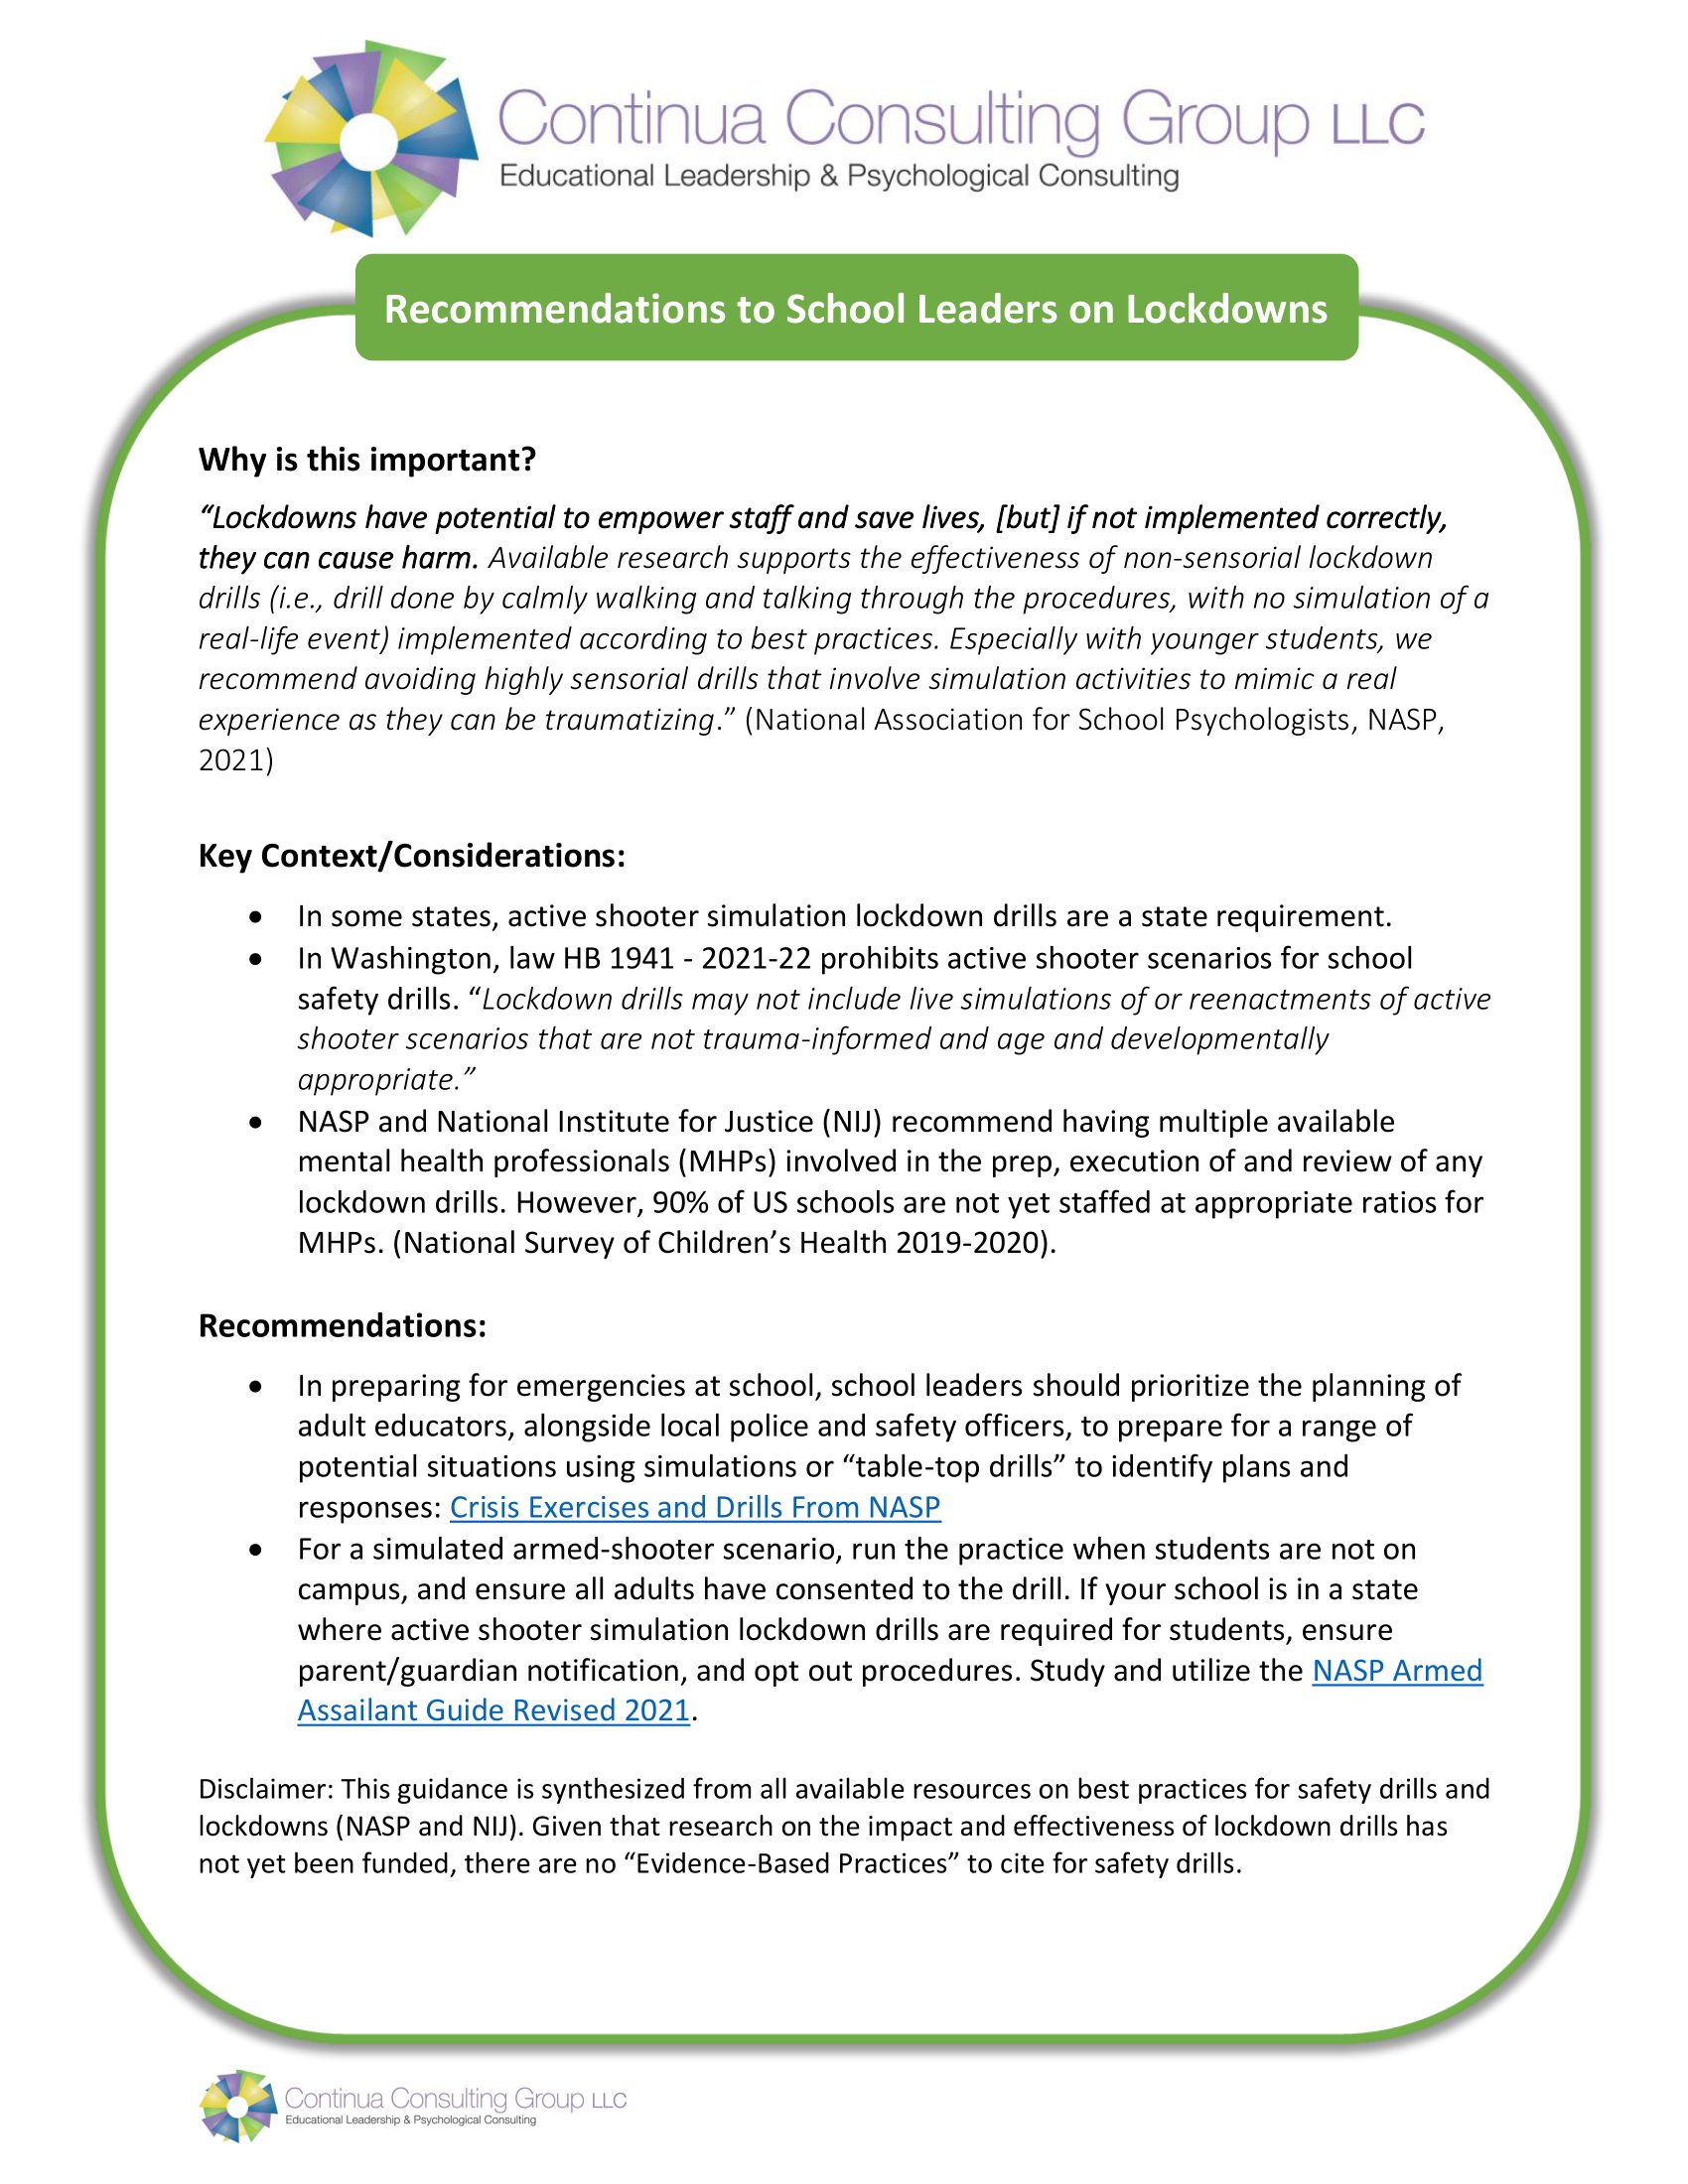 Lockdown procedure guidance. Gun violence. Washington state lockdown. Guidance to school leaders on lockdowns.